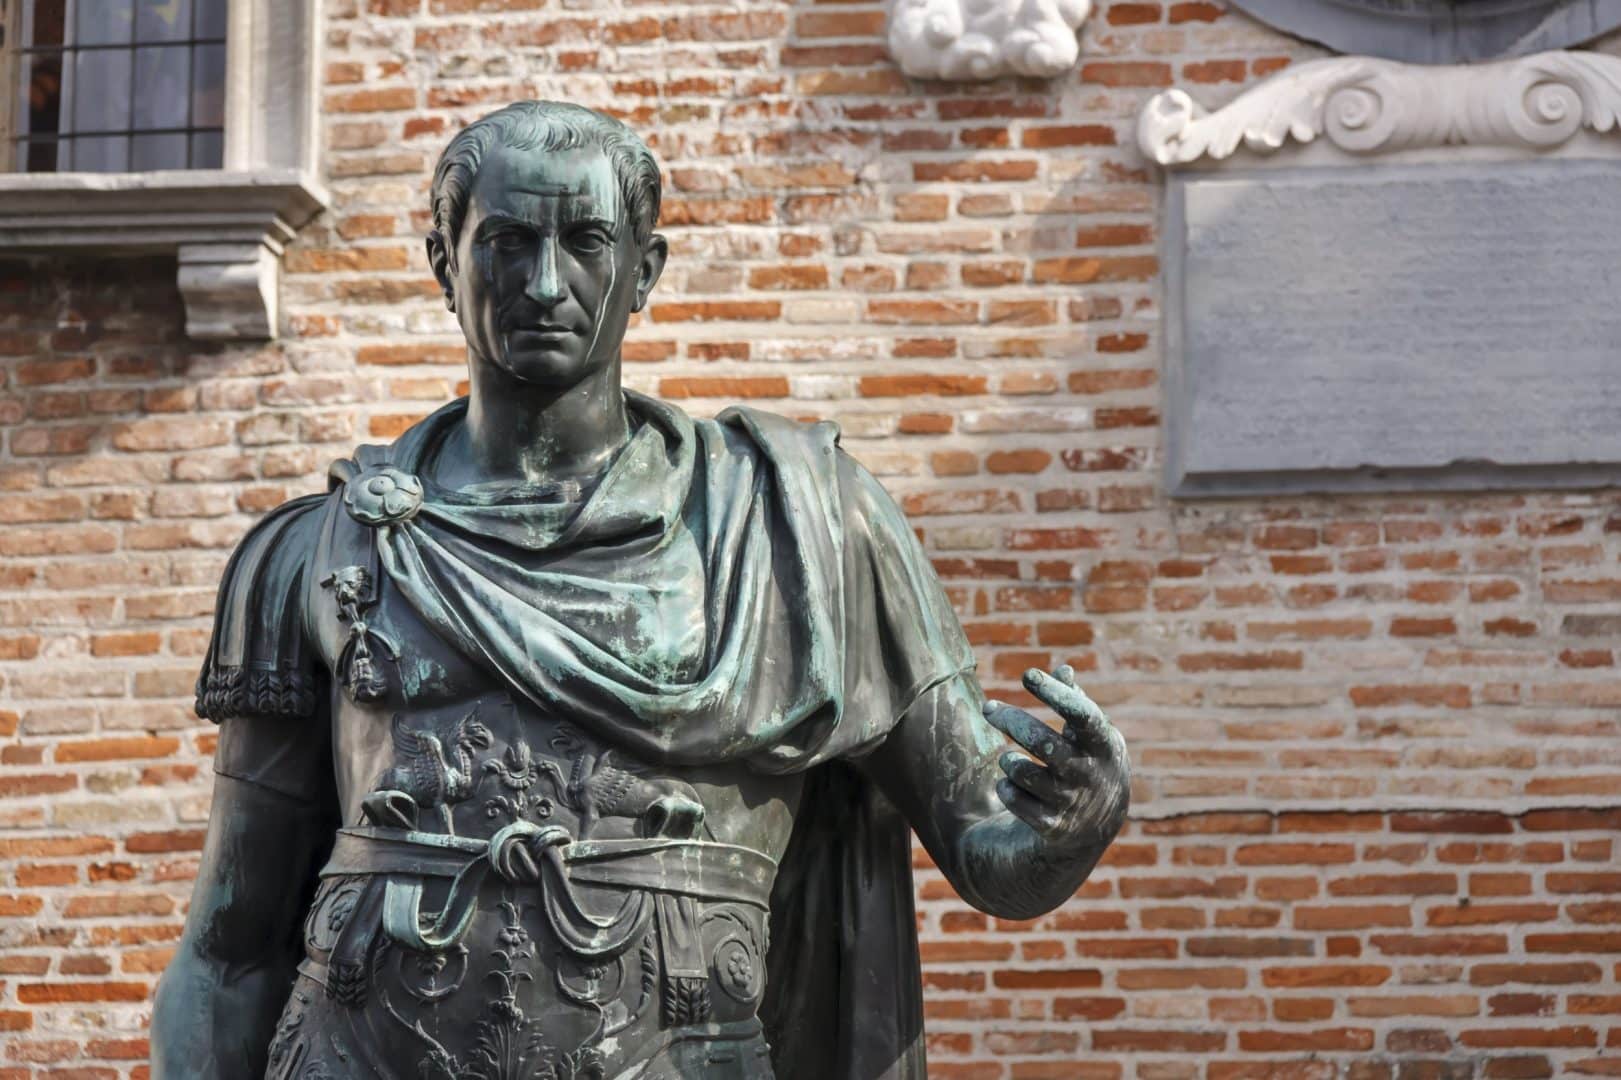 Júlio César: Conheça mais sobre a vida do líder romano